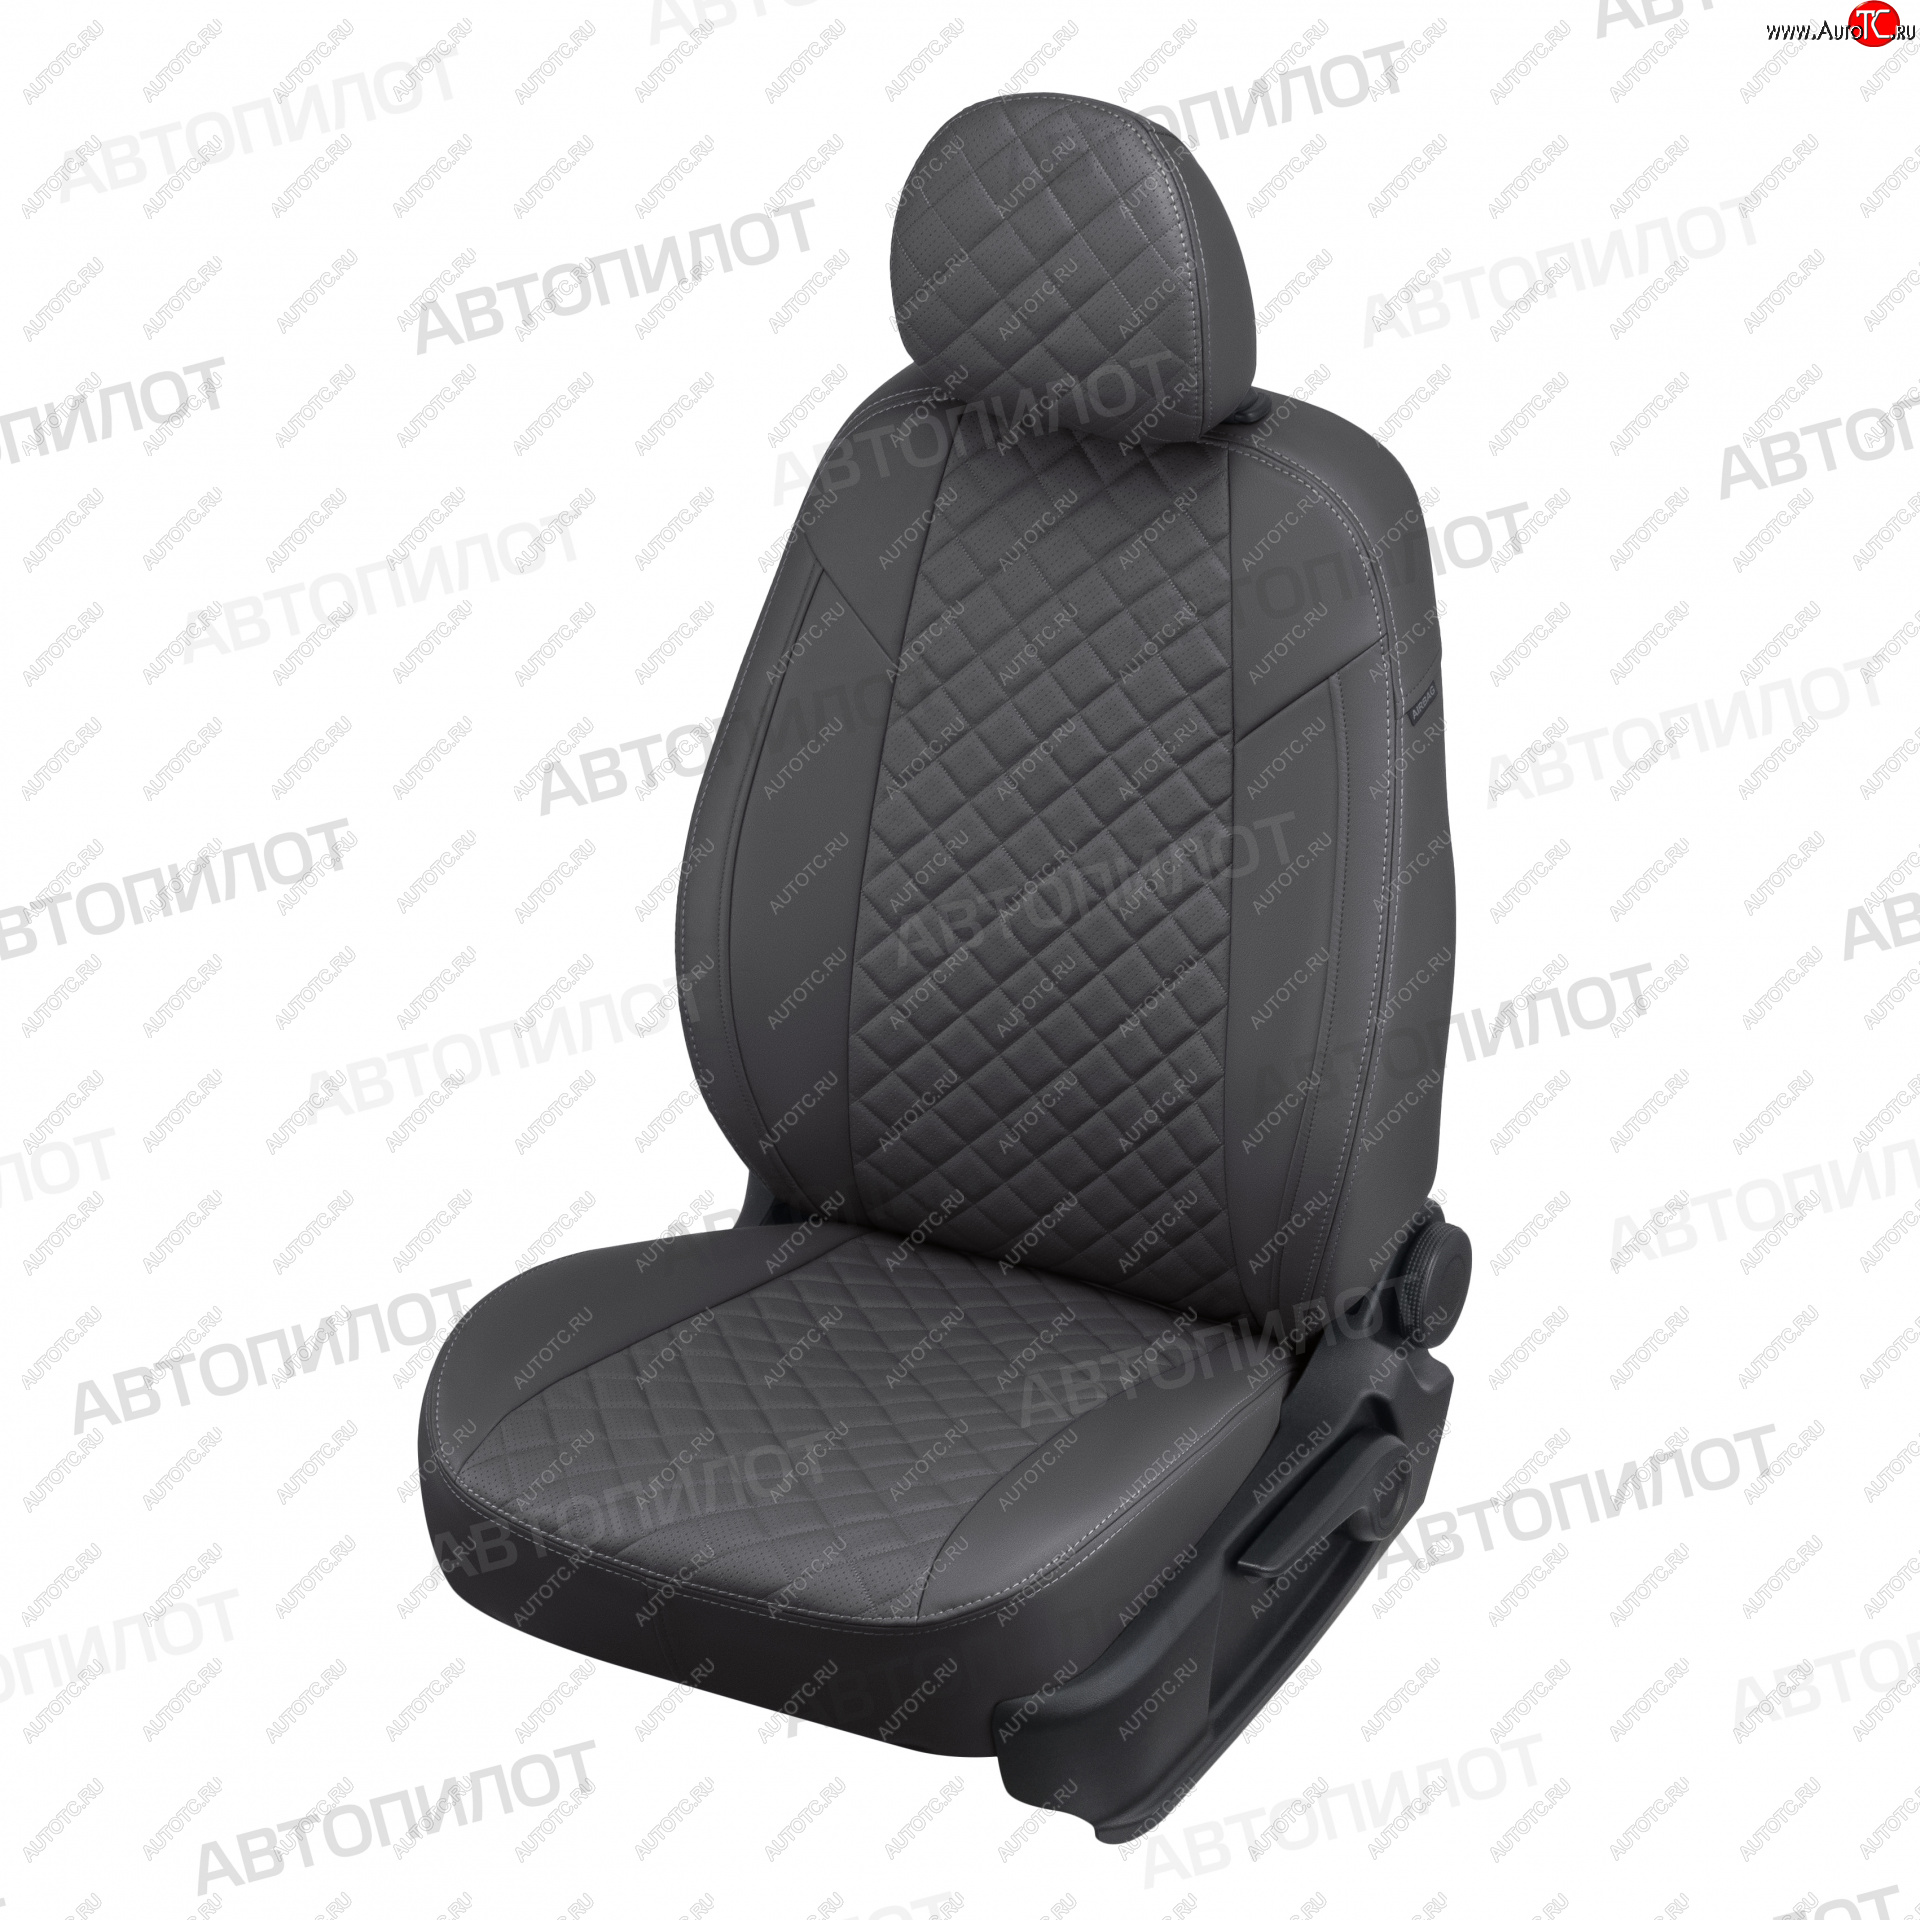 7 599 р. Чехлы сидений (экокожа) Автопилот Ромб  KIA Cerato  2 TD (2008-2013) (темно-серый)